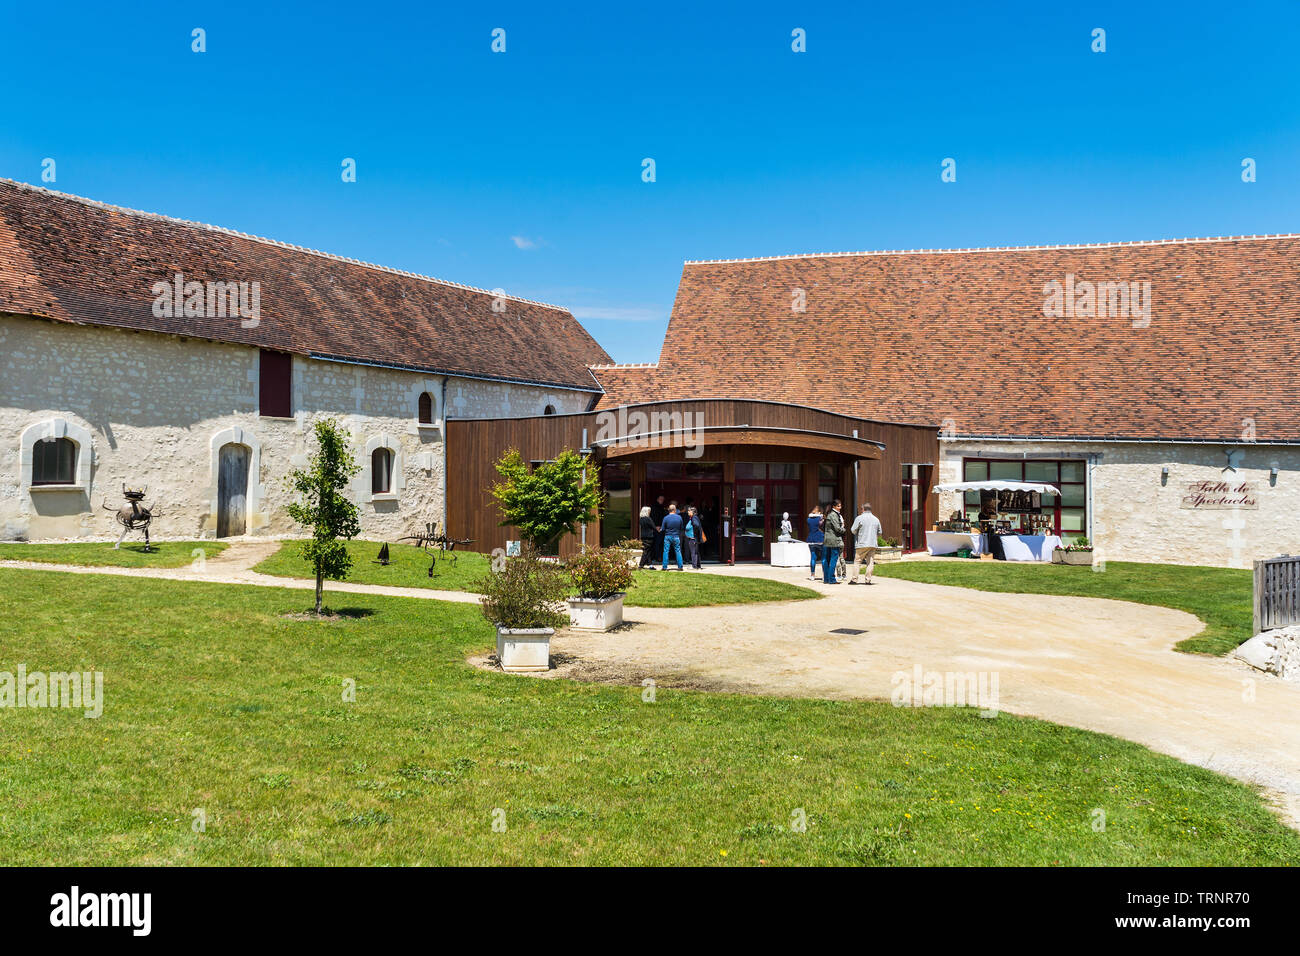 Exhibition hall, theatre exterior - 'Salle de Spectacle', Charnizay, Indre-et-Loire, France. Stock Photo